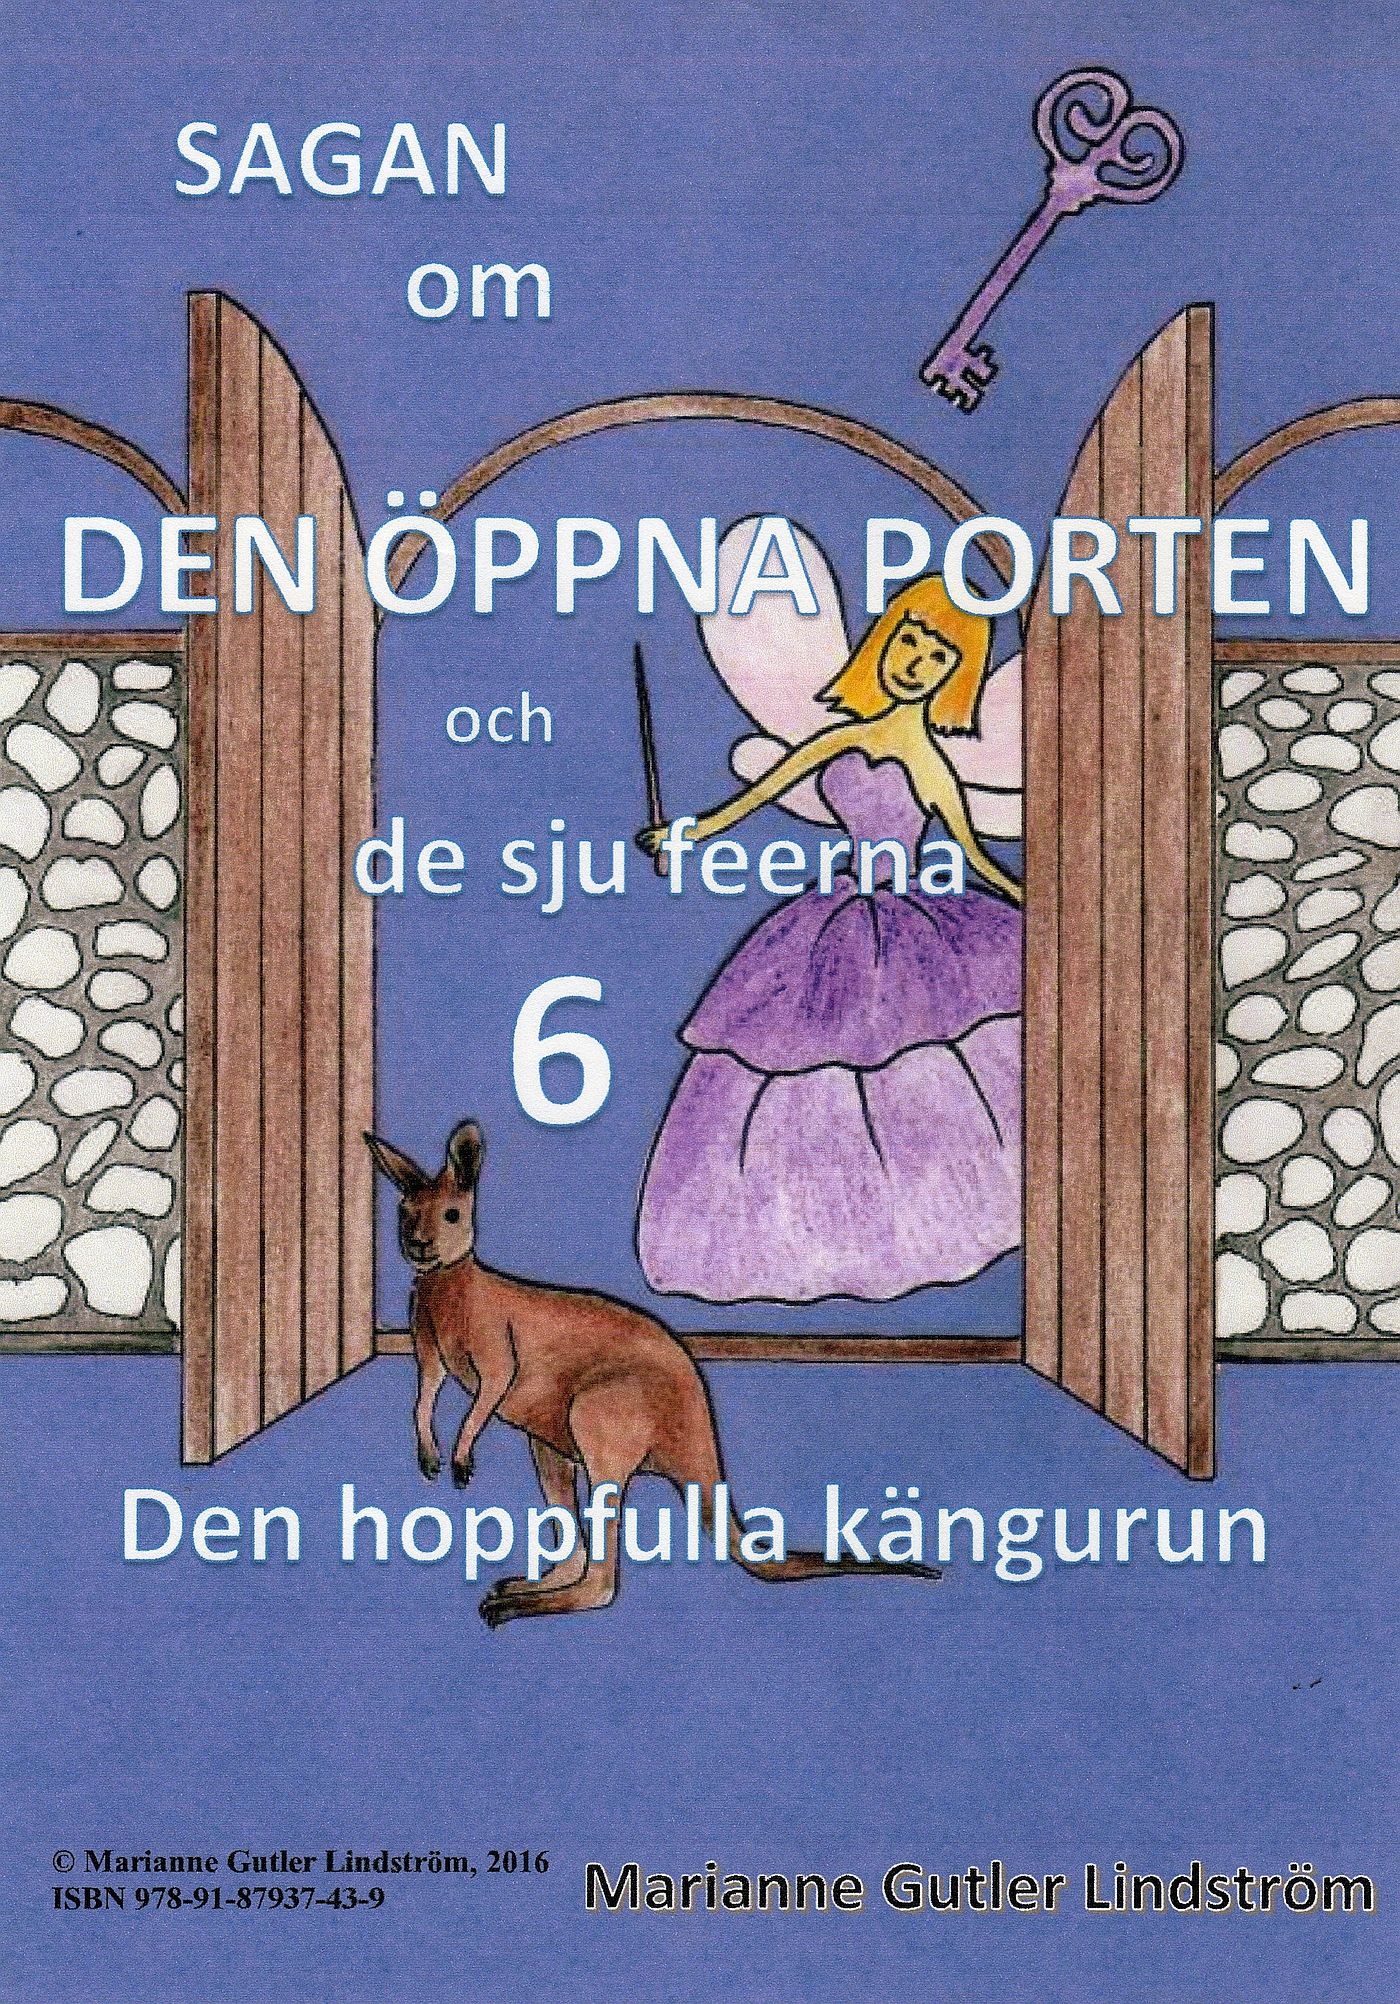 Sagan om den öppna porten 6. Den hoppfulla kängurun, e-bog af Marianne Gutler Lindström